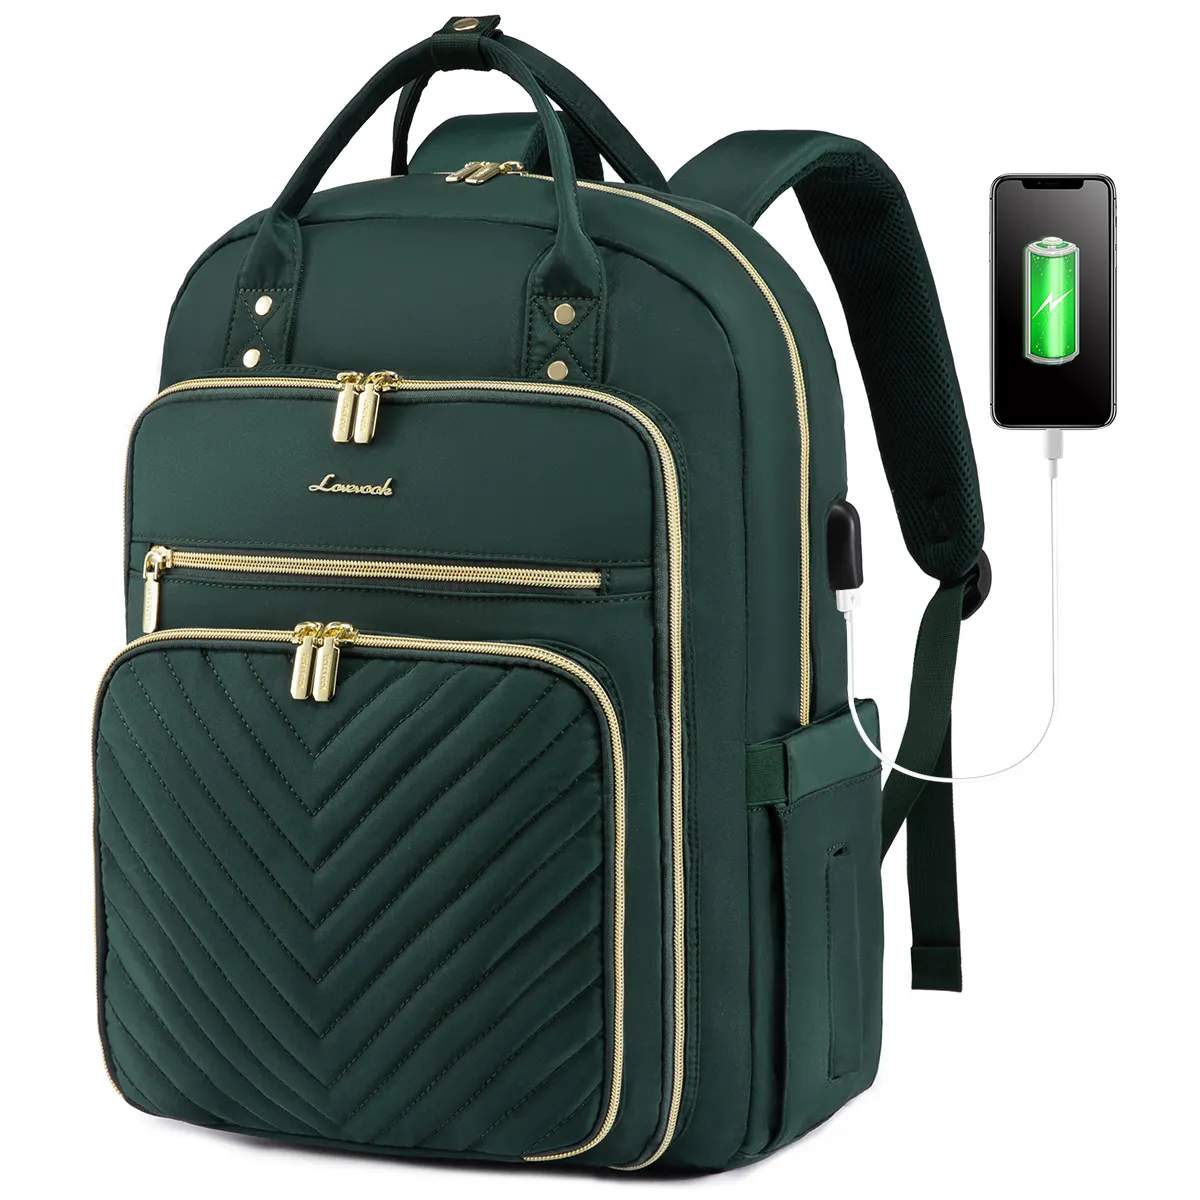 Lovevook mochila acolchoada para laptop masculina, mochila multifuncional de grande capacidade com USB Lovevook 15.6 17 em novo